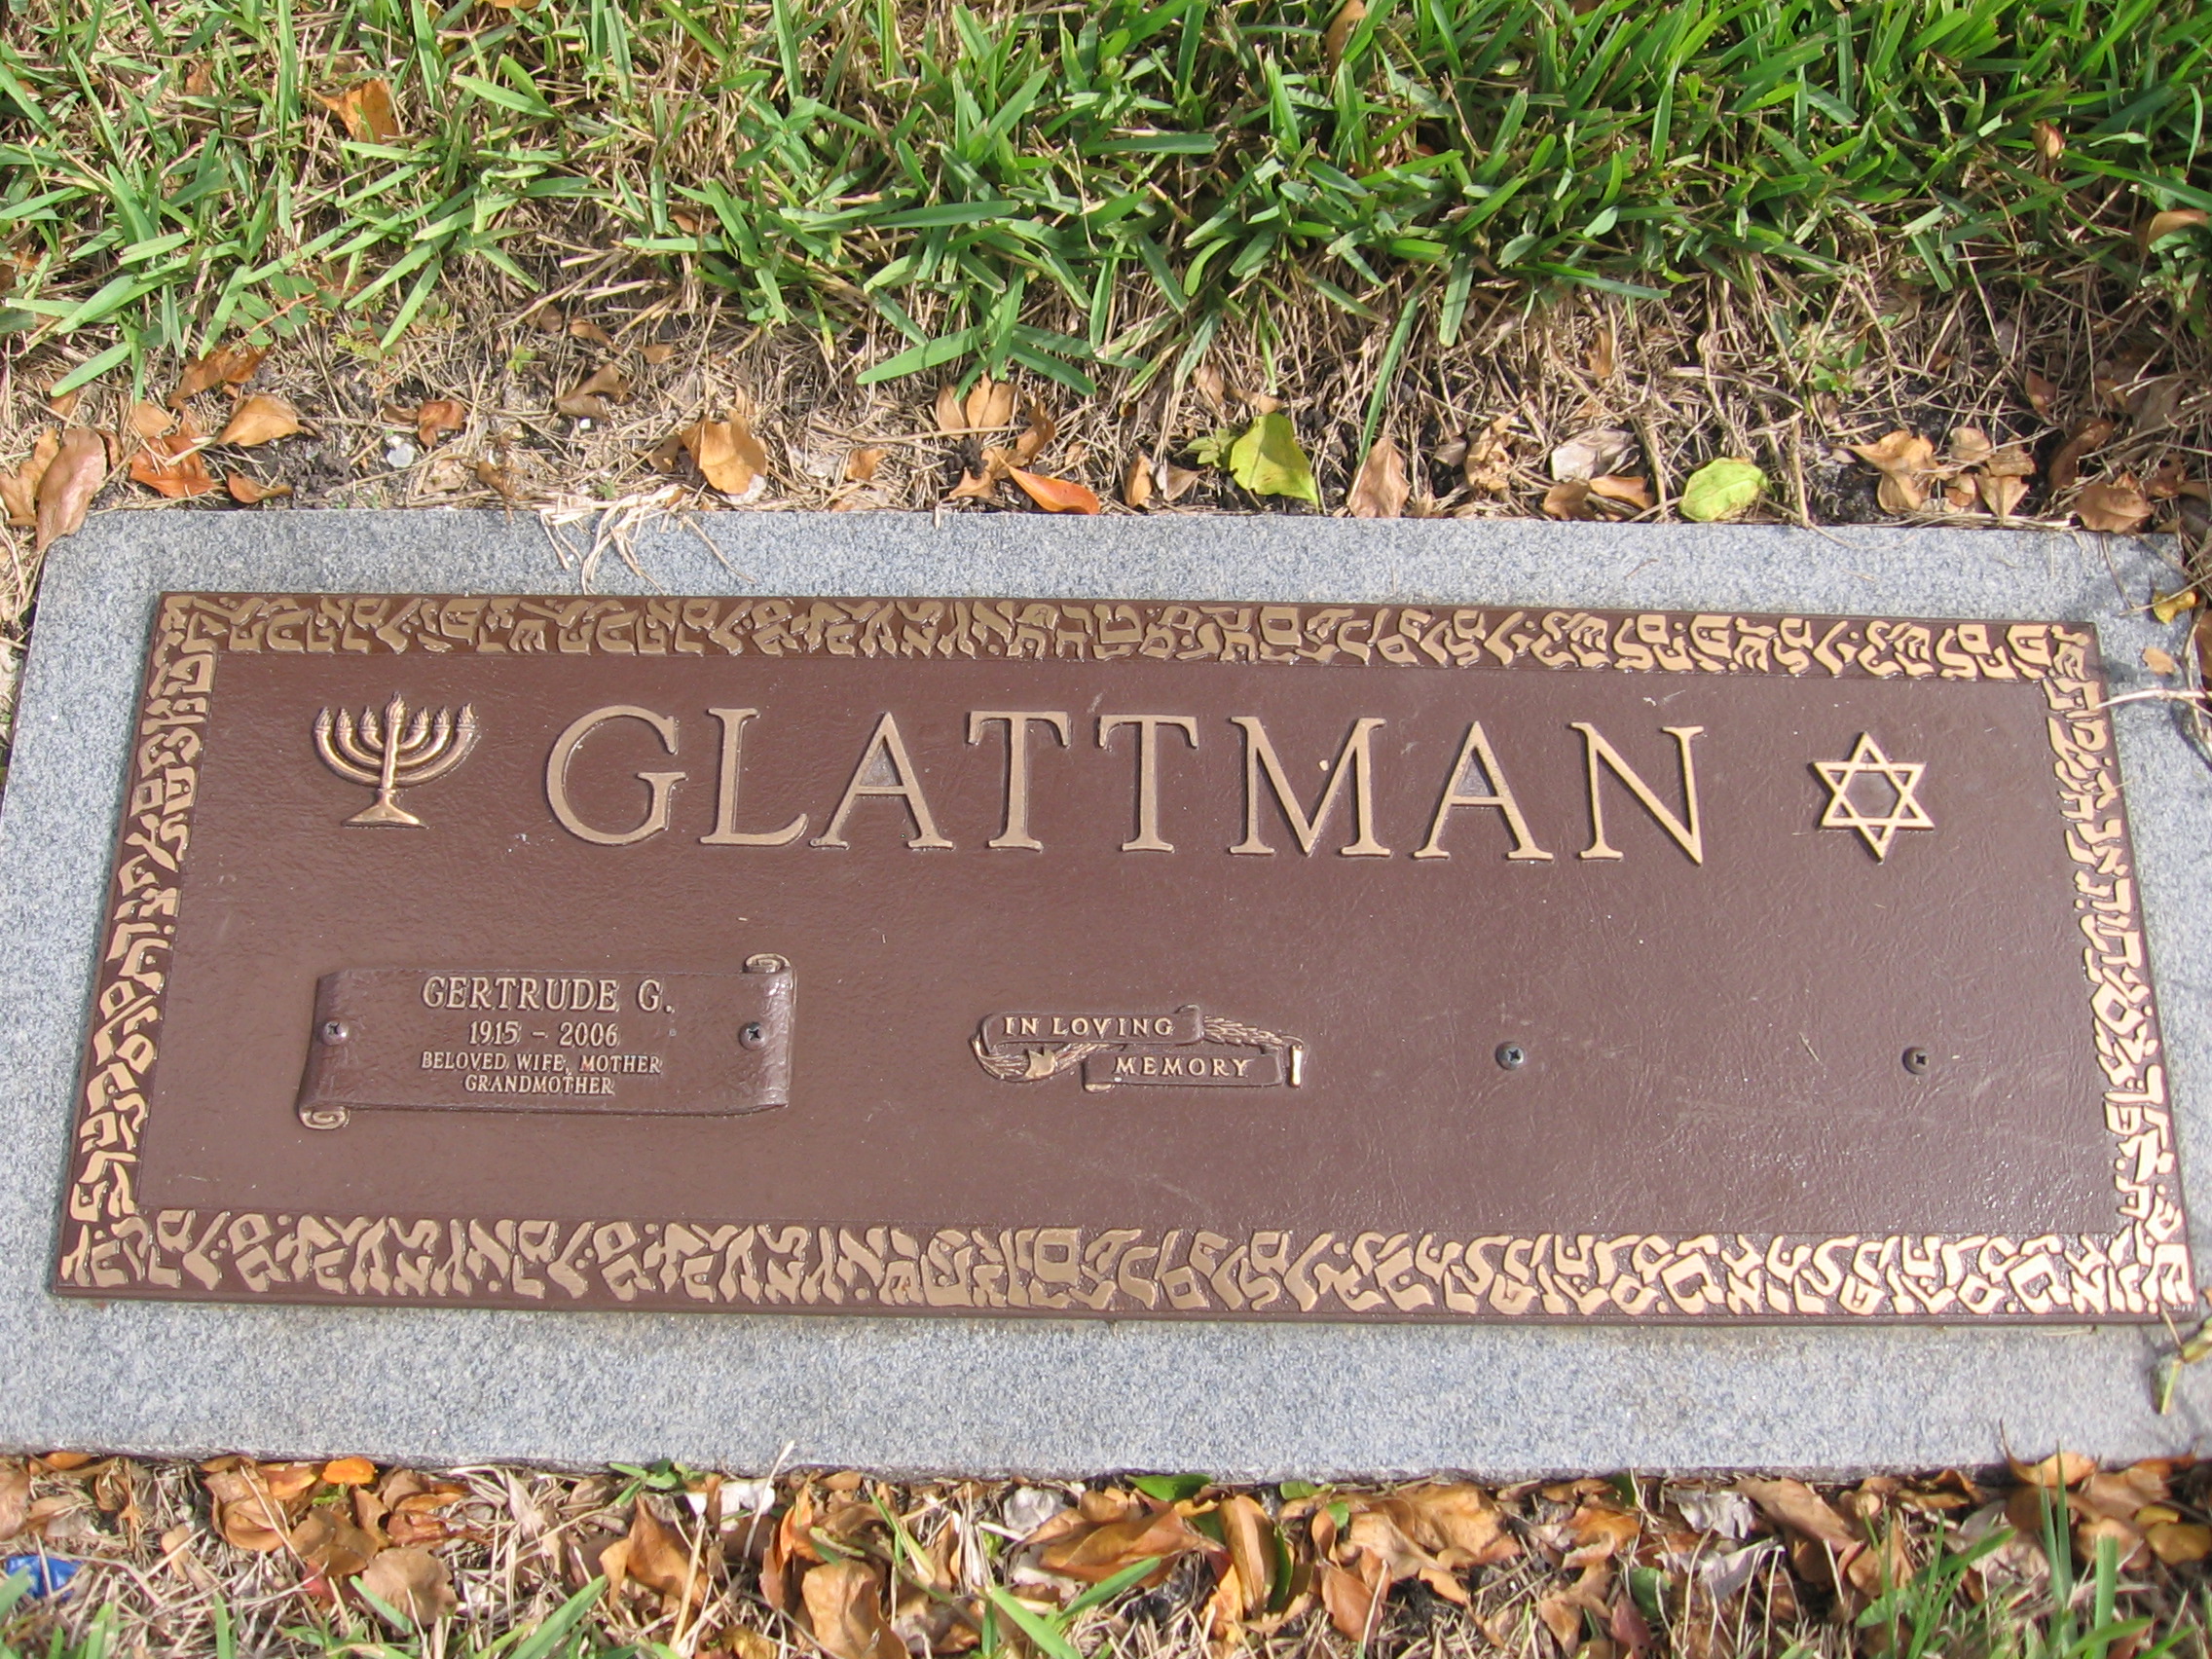 Gertrude G Glattman